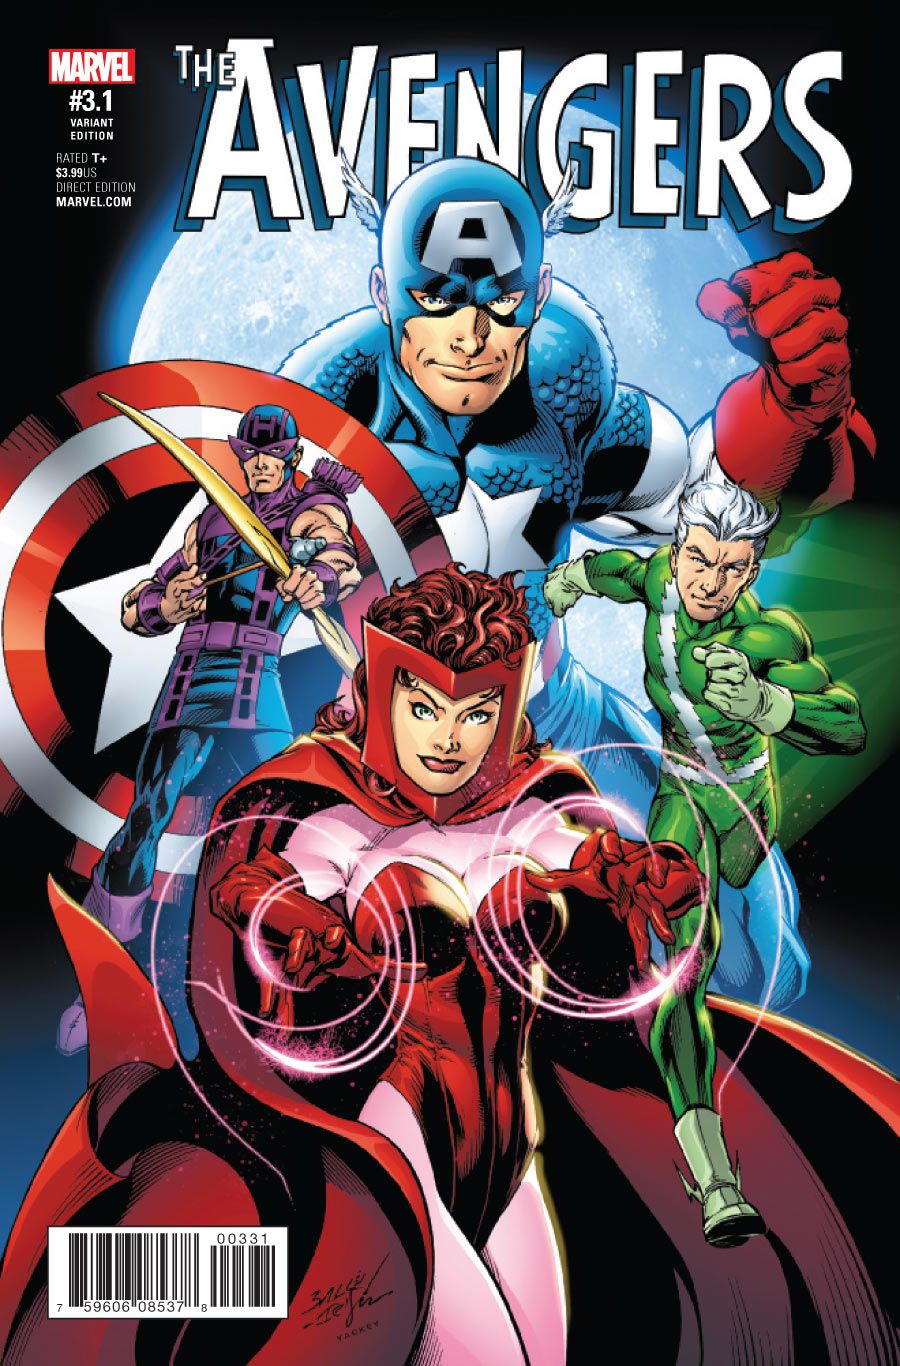 The Avengers #3.1